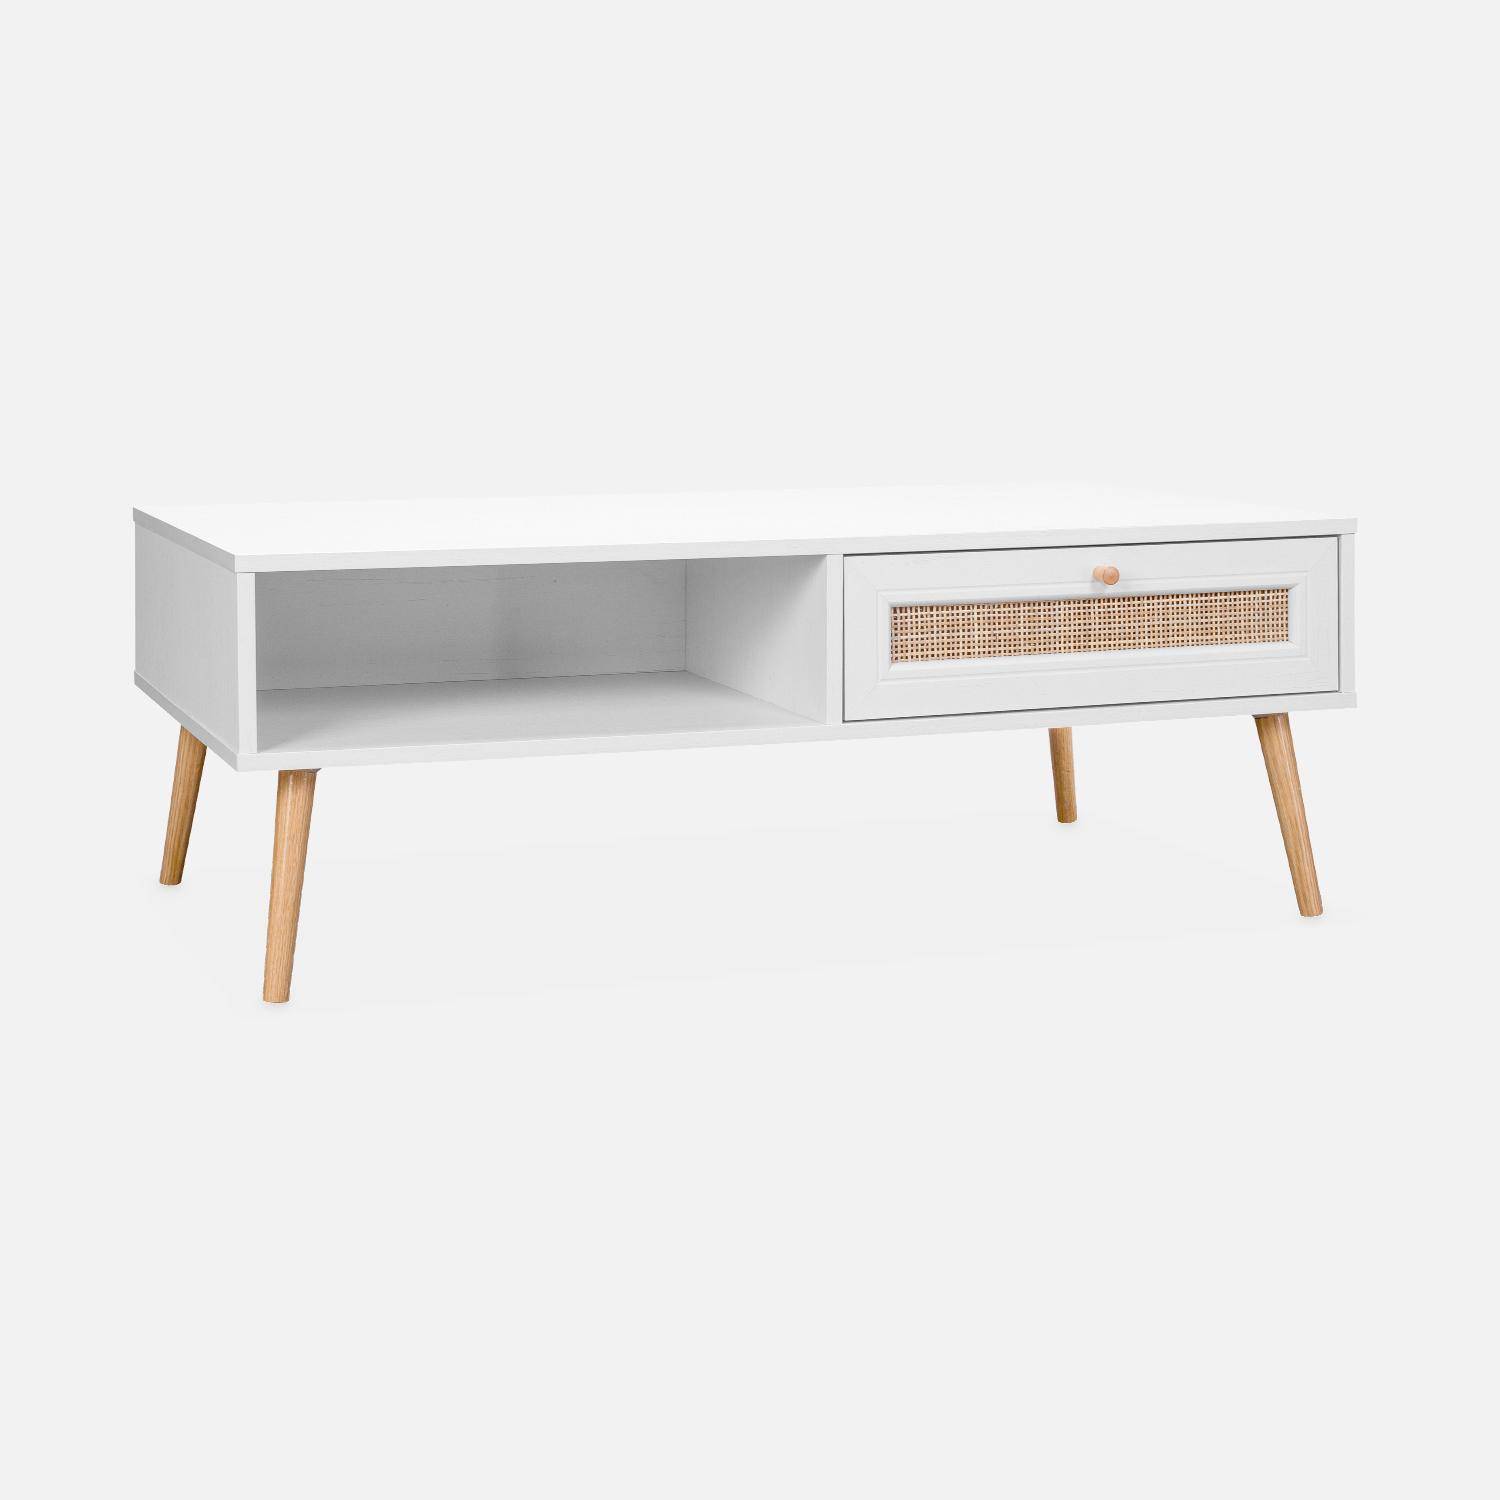  Wood and woven rattan coffee table with storage, 110x59x39cm, white, Boheme Photo4